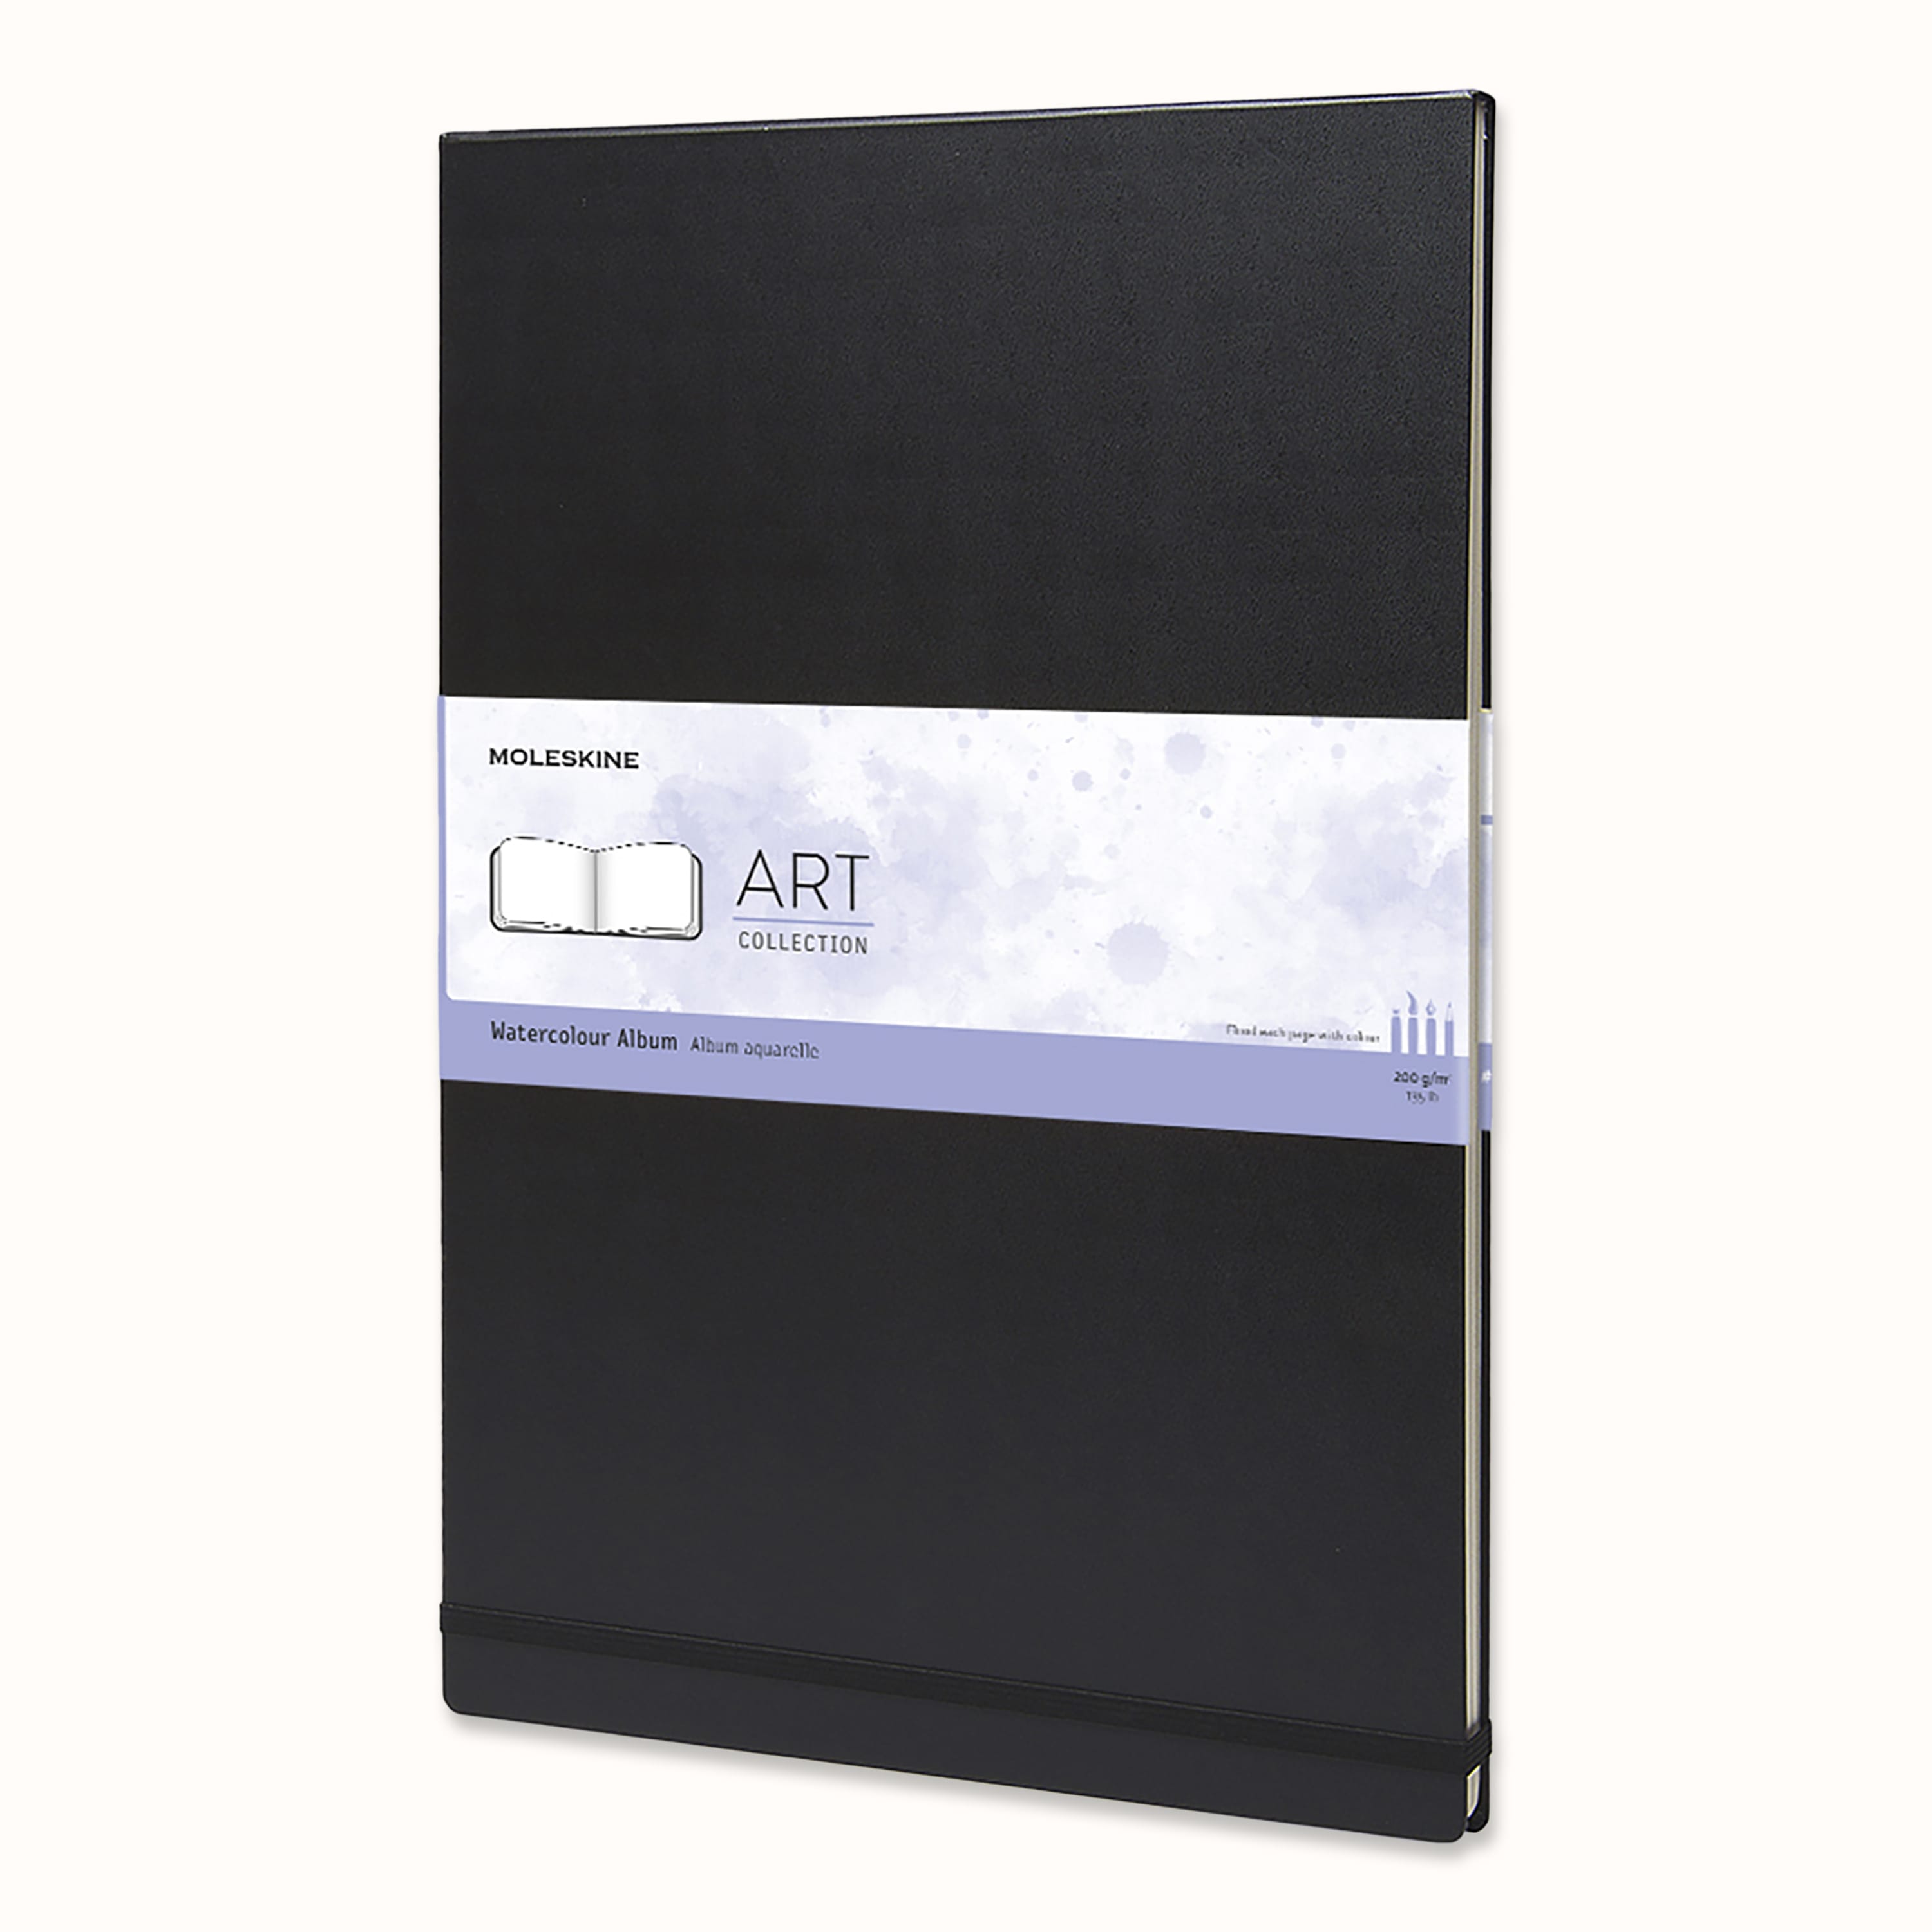 Colour Black Moleskine 9 x 14 cm Pocket Size Watercolour Notebook Watercolour Notebook 60 Pages Paper Suitable for Watercolour Pencils and Paints Hard Cover and Elastic Closure 